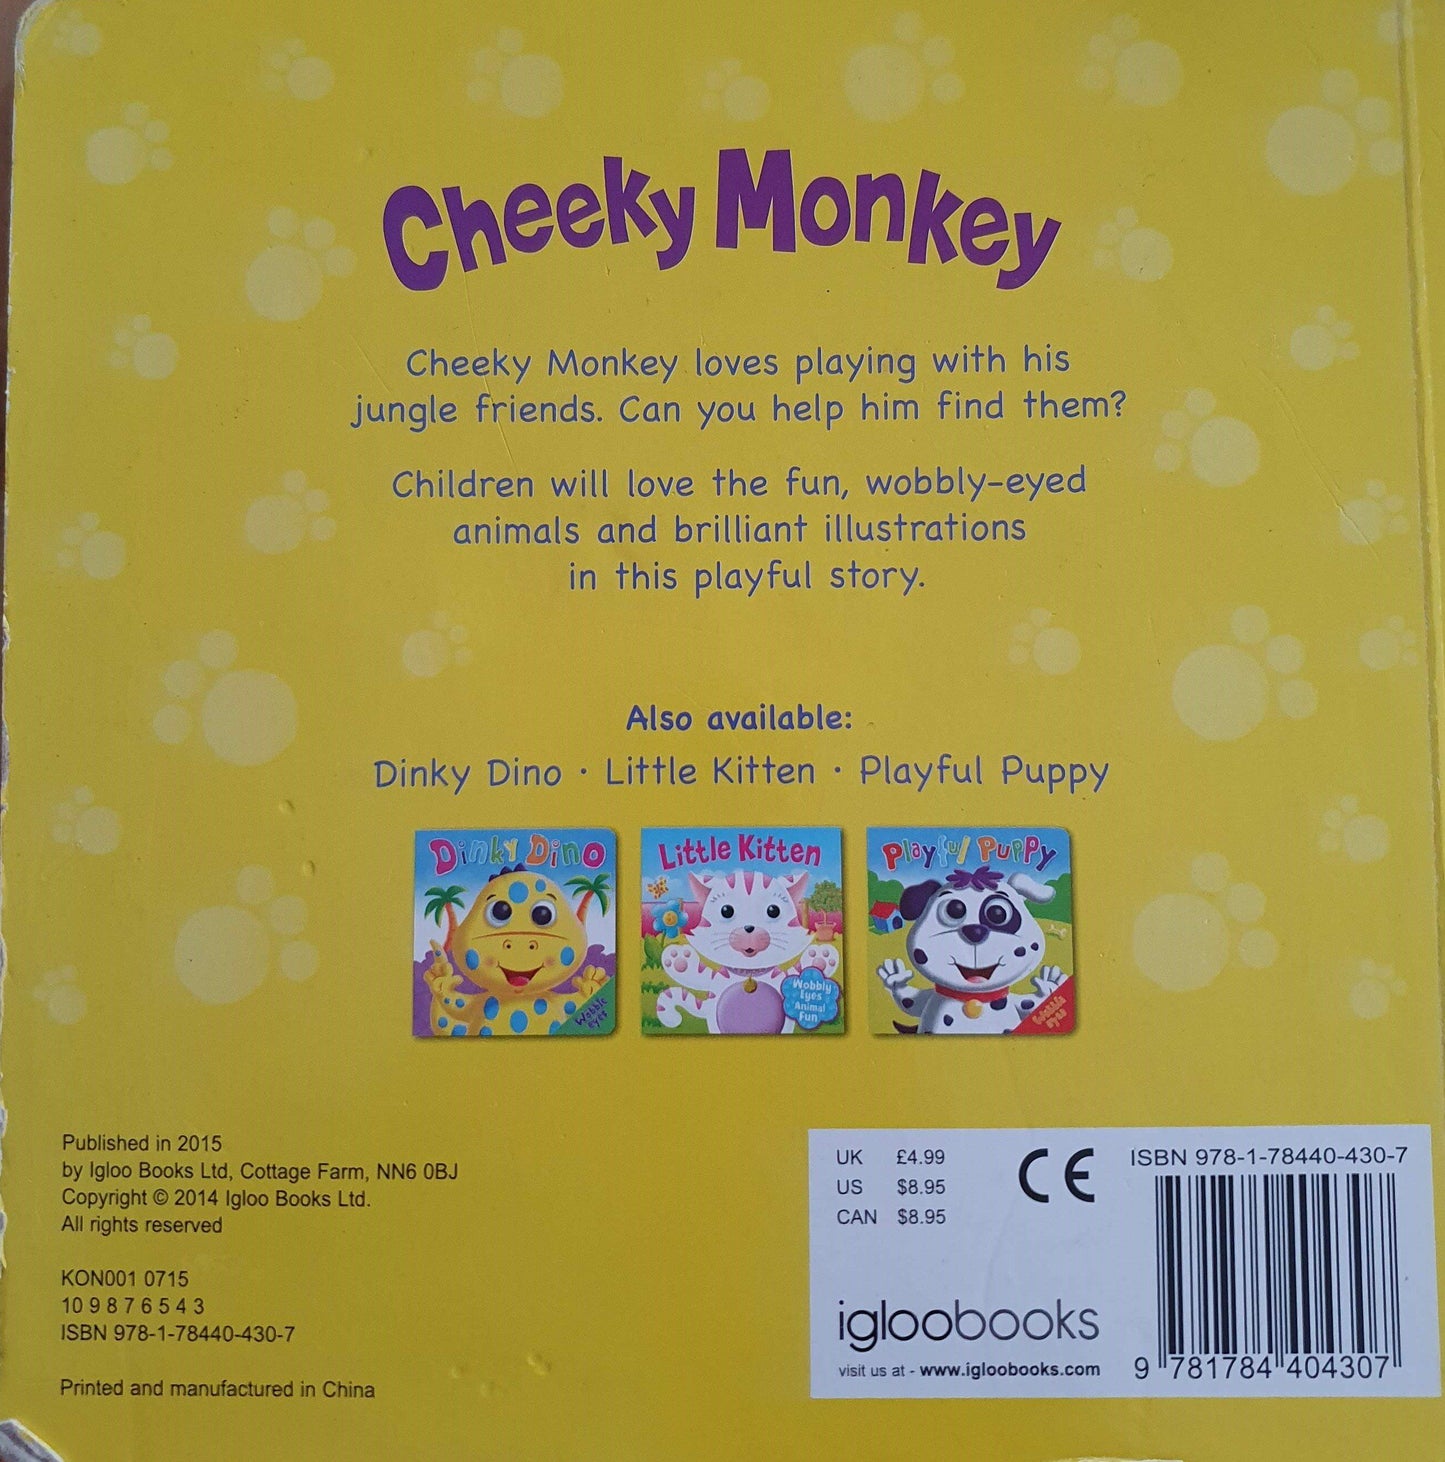 Cheeky Monkey Very Good Recuddles.ch  (6217897246905)